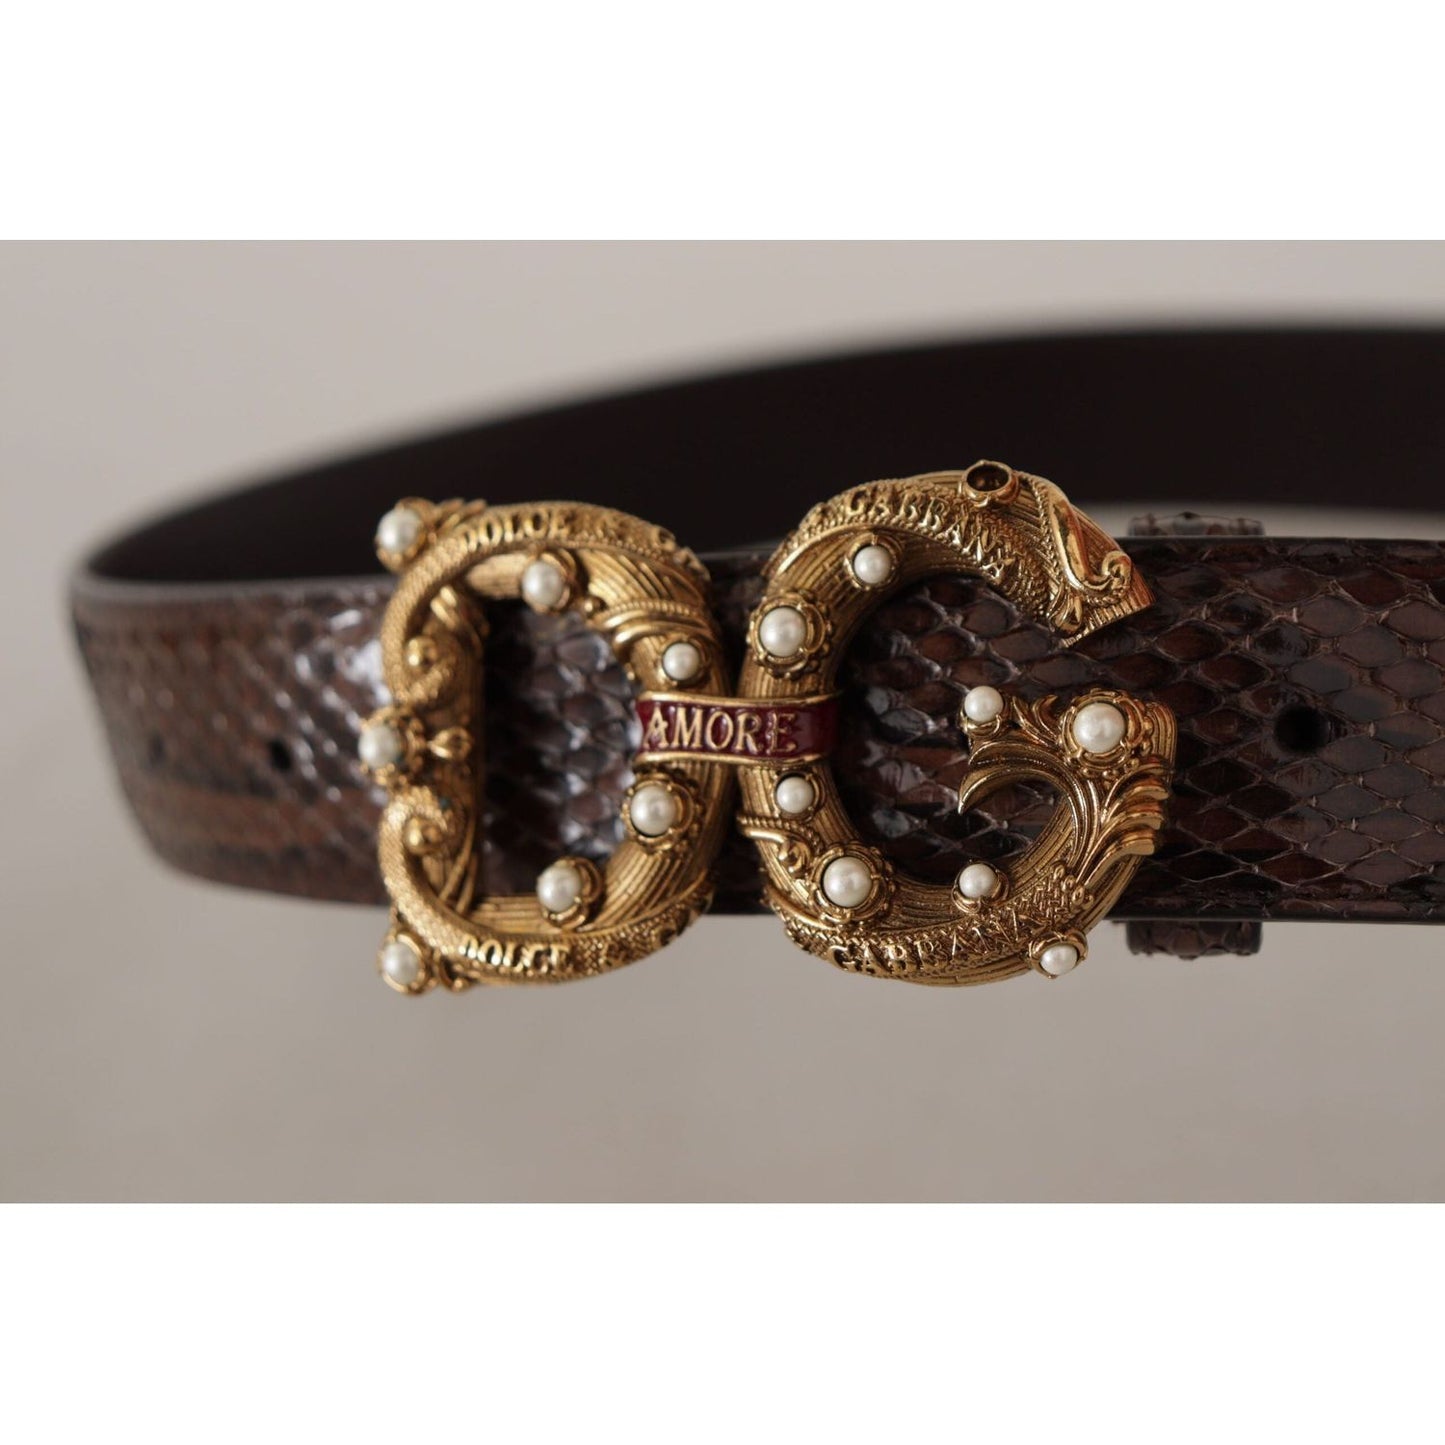 Dolce & Gabbana Elegant Snakeskin Leather Belt brown-amore-animal-print-exotic-leather-logo-buckle-belt IMG_8825-scaled-37413c9b-164.jpg